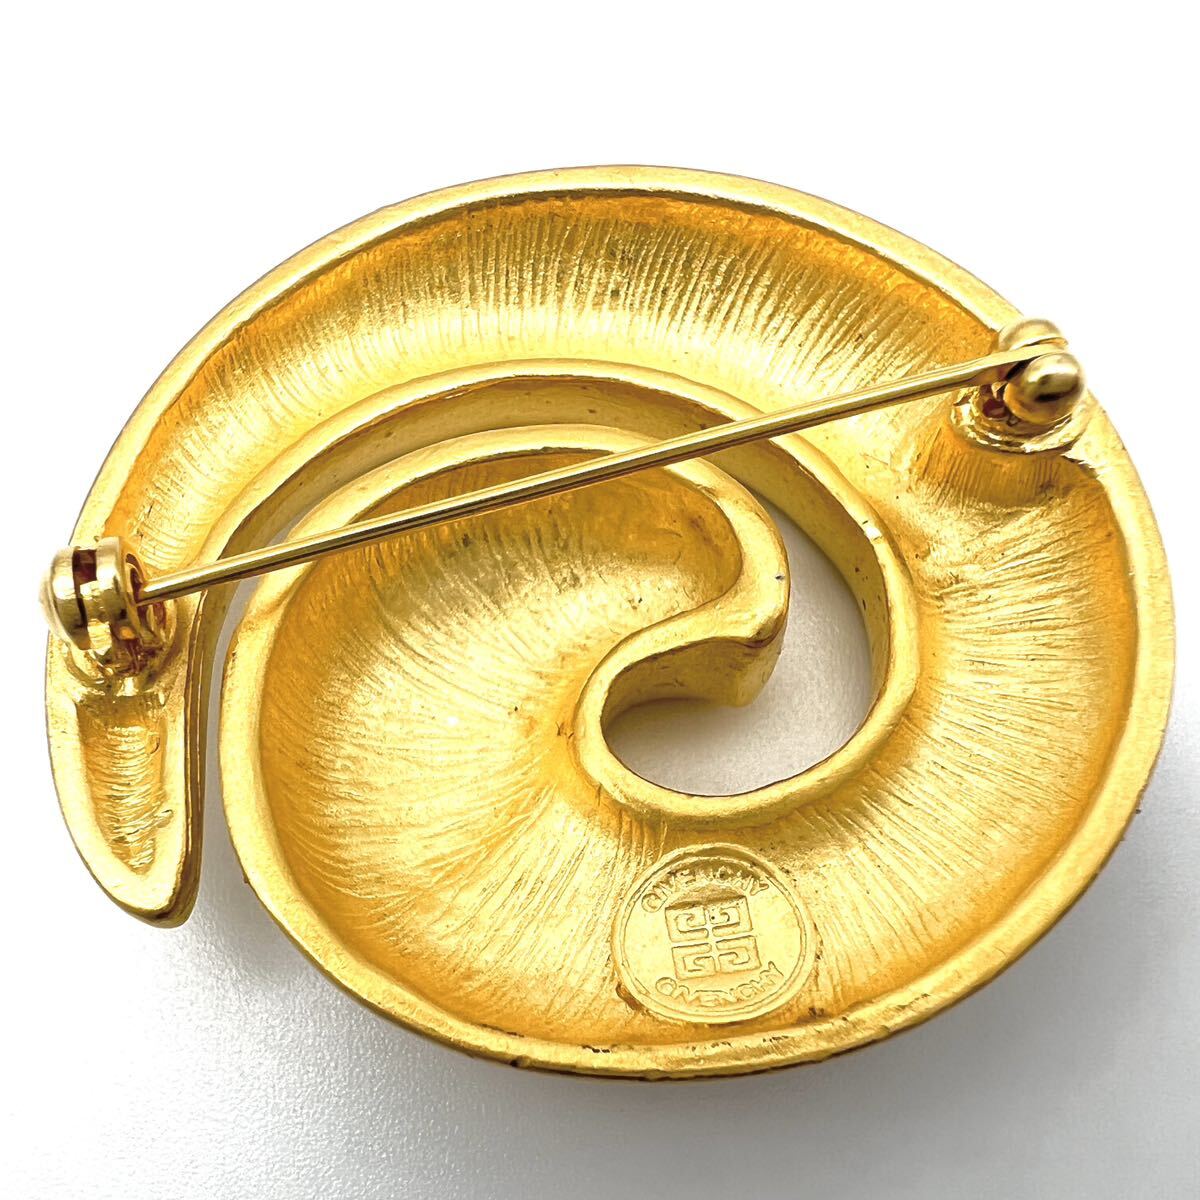 GIVENCHYlji van si. brooch [ Acty ] Logo round mat Gold color large .. Vintage Givenchy brand a533et